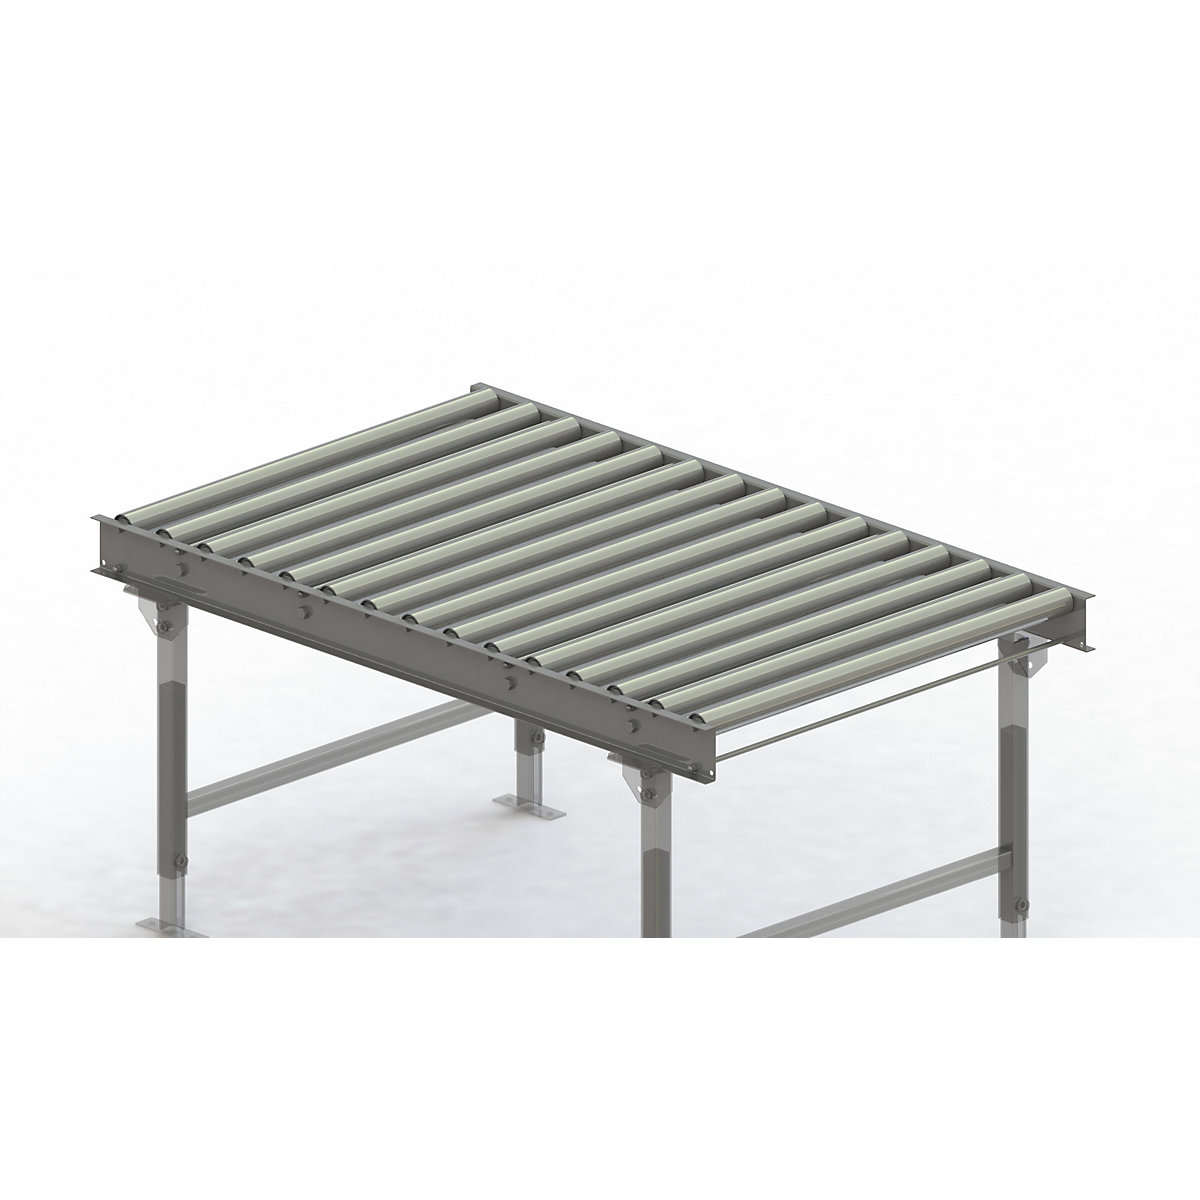 Gura – Roller conveyor, steel frame with zinc plated steel rollers, track width 900 mm, distance between axles 100 mm, length 1.5 m